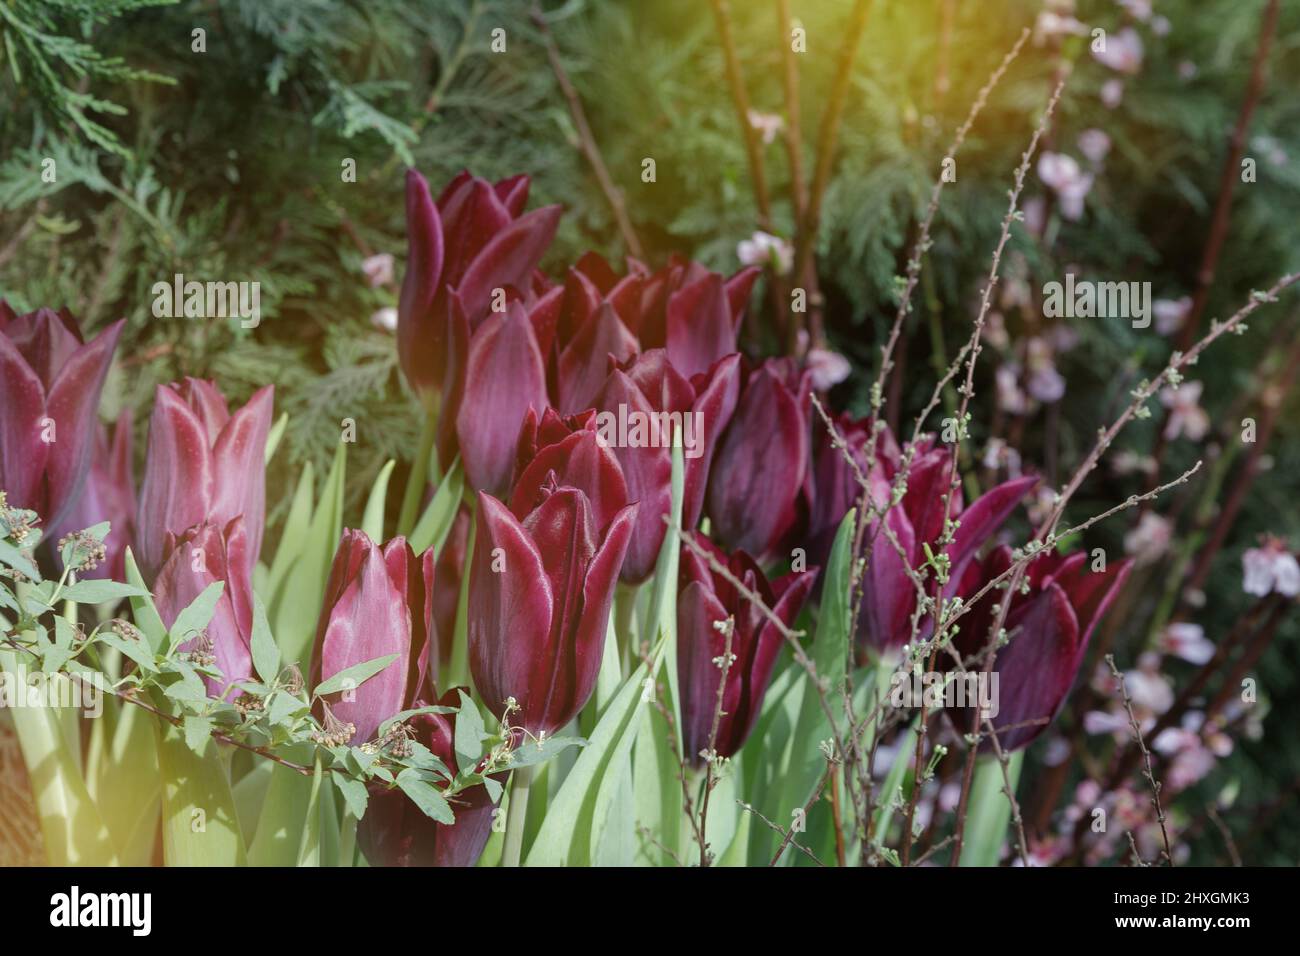 Dark Burgundy Tulips. The color of the flower is burgundy-black. Stock Photo